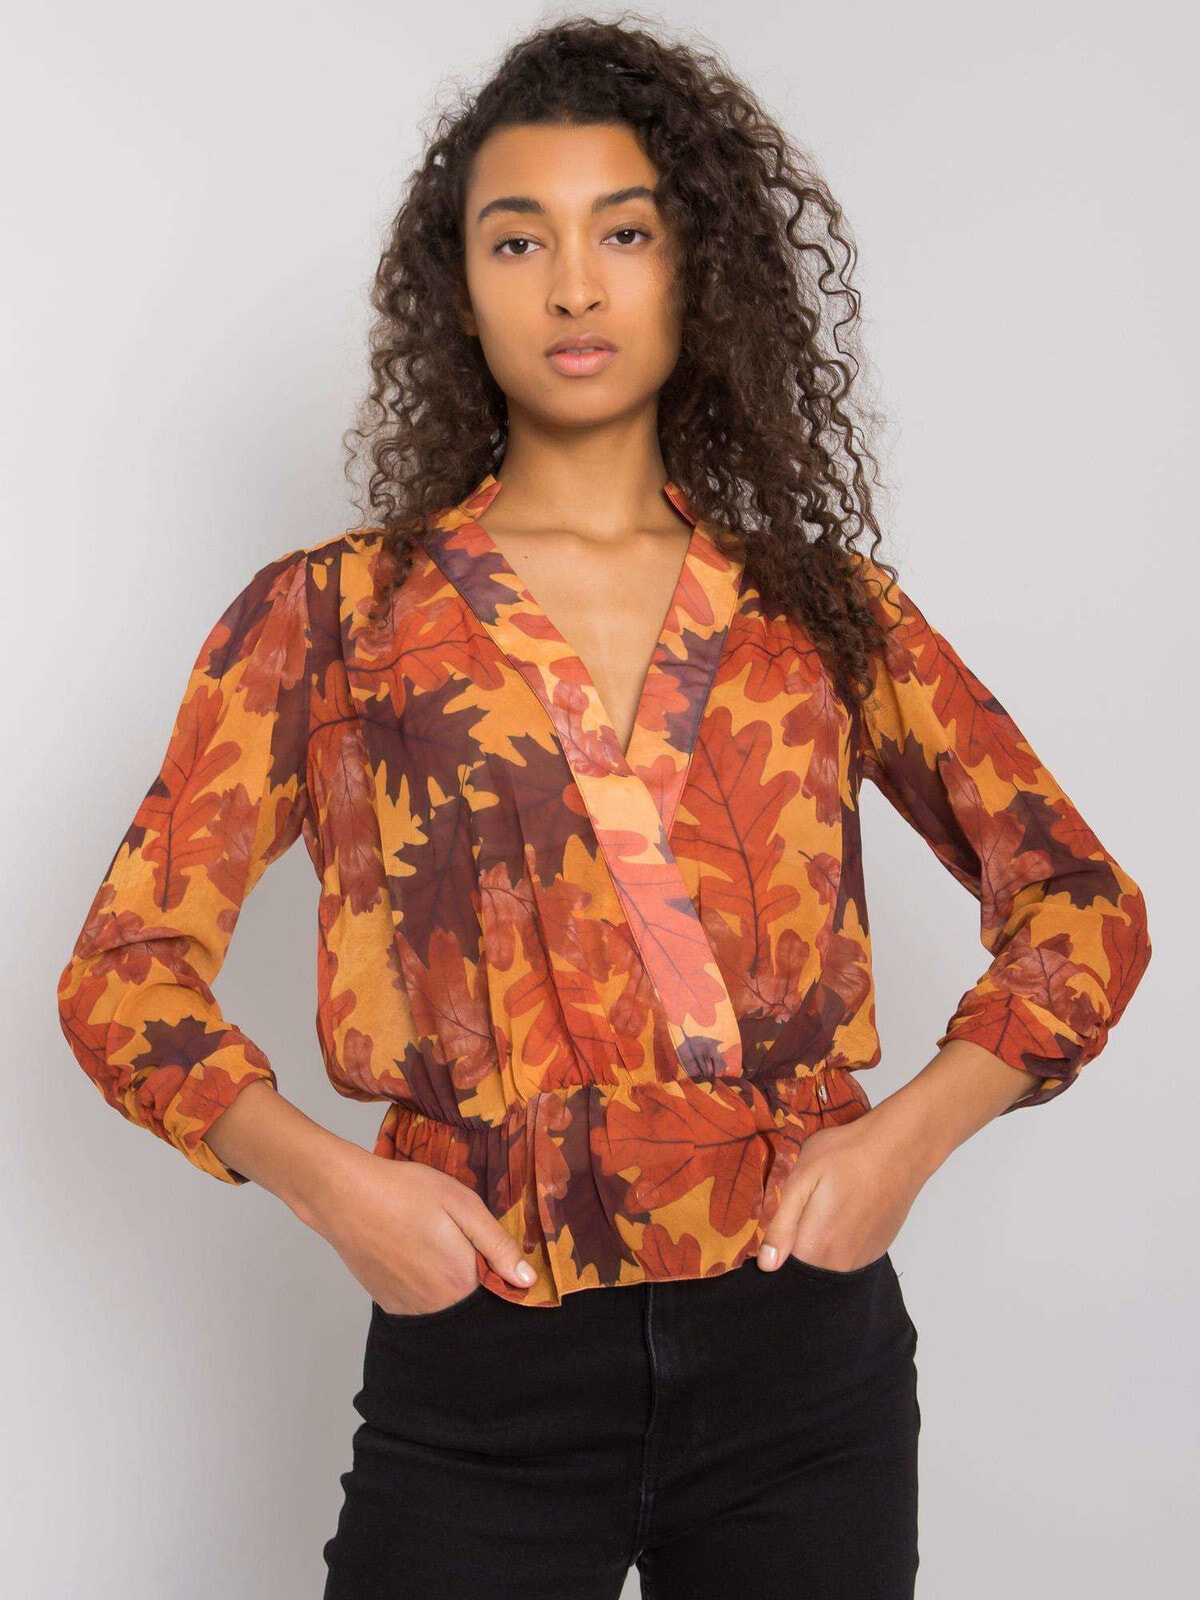 Фабрика блузок. Cynthia Rowley одежда. Блузка Kiabi женская леопард красный хаки.